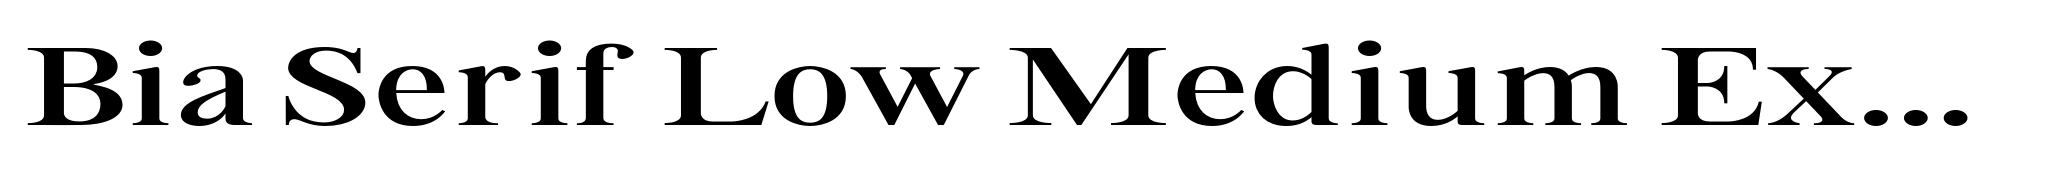 Bia Serif Low Medium Expanded image